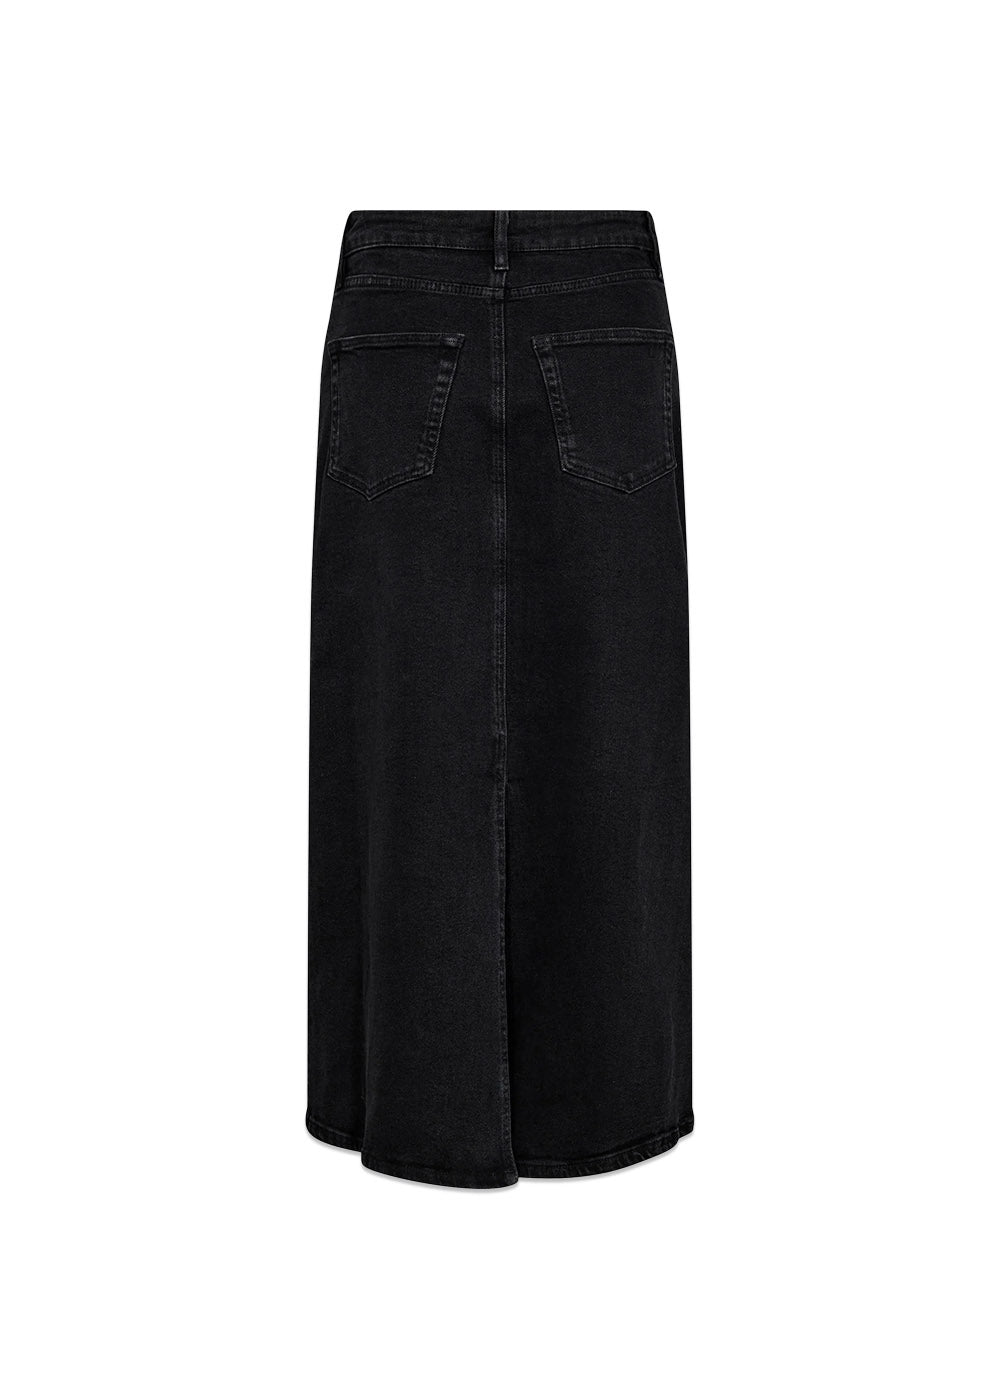 IVY-Zoe Maxi Skirt Wash Faded Black - Black